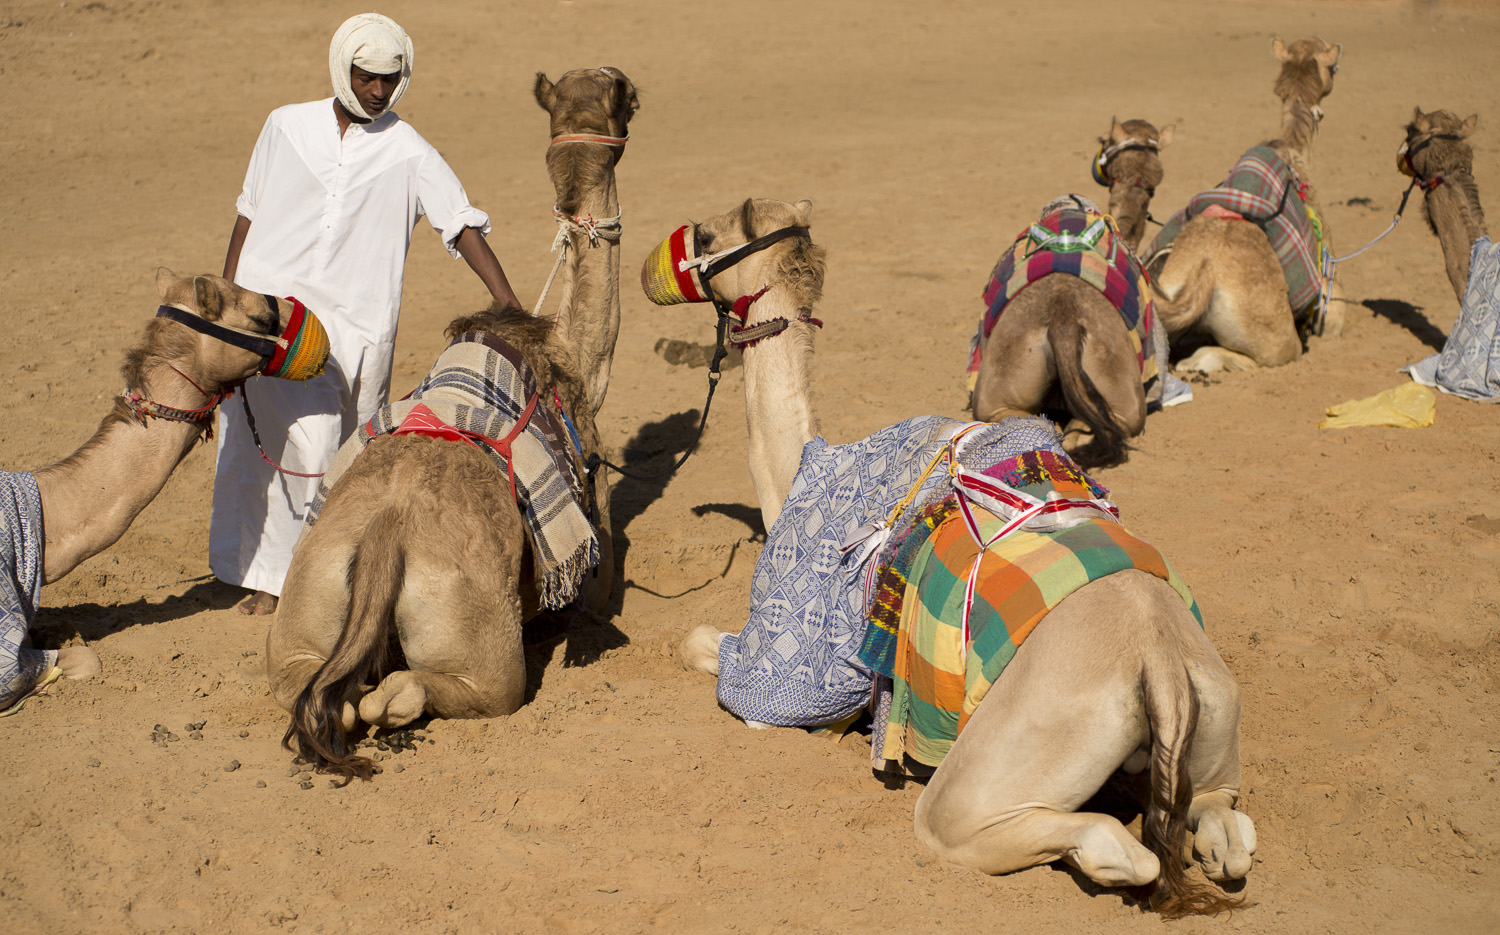 jo-kearney-video-photos-photography-travel-portraits-prints-for-sale-dubai-camels-camel-herder-dubai-UAE-desert-racing-camels.jpg